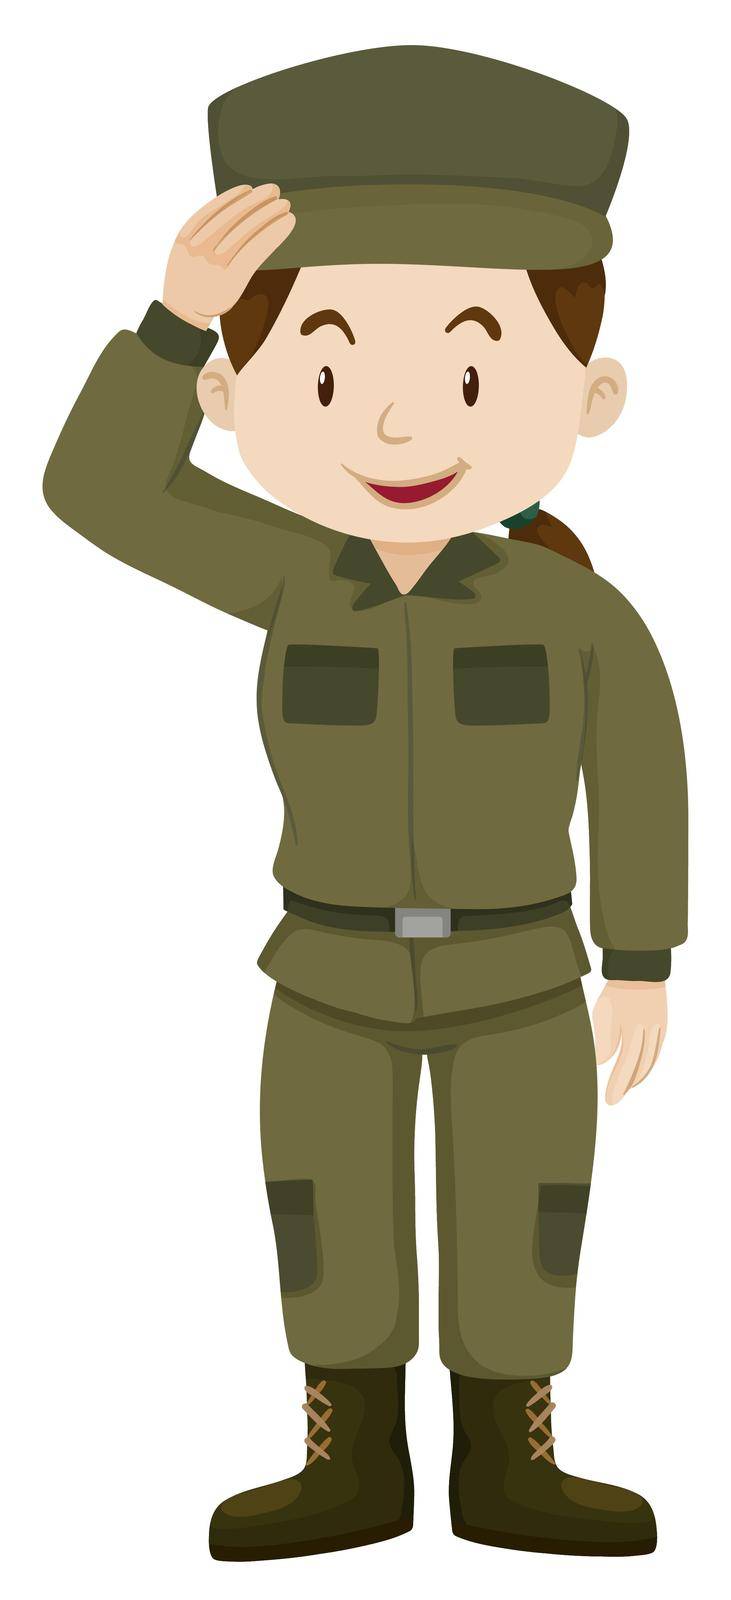 Female soldier in green uniform by iimages